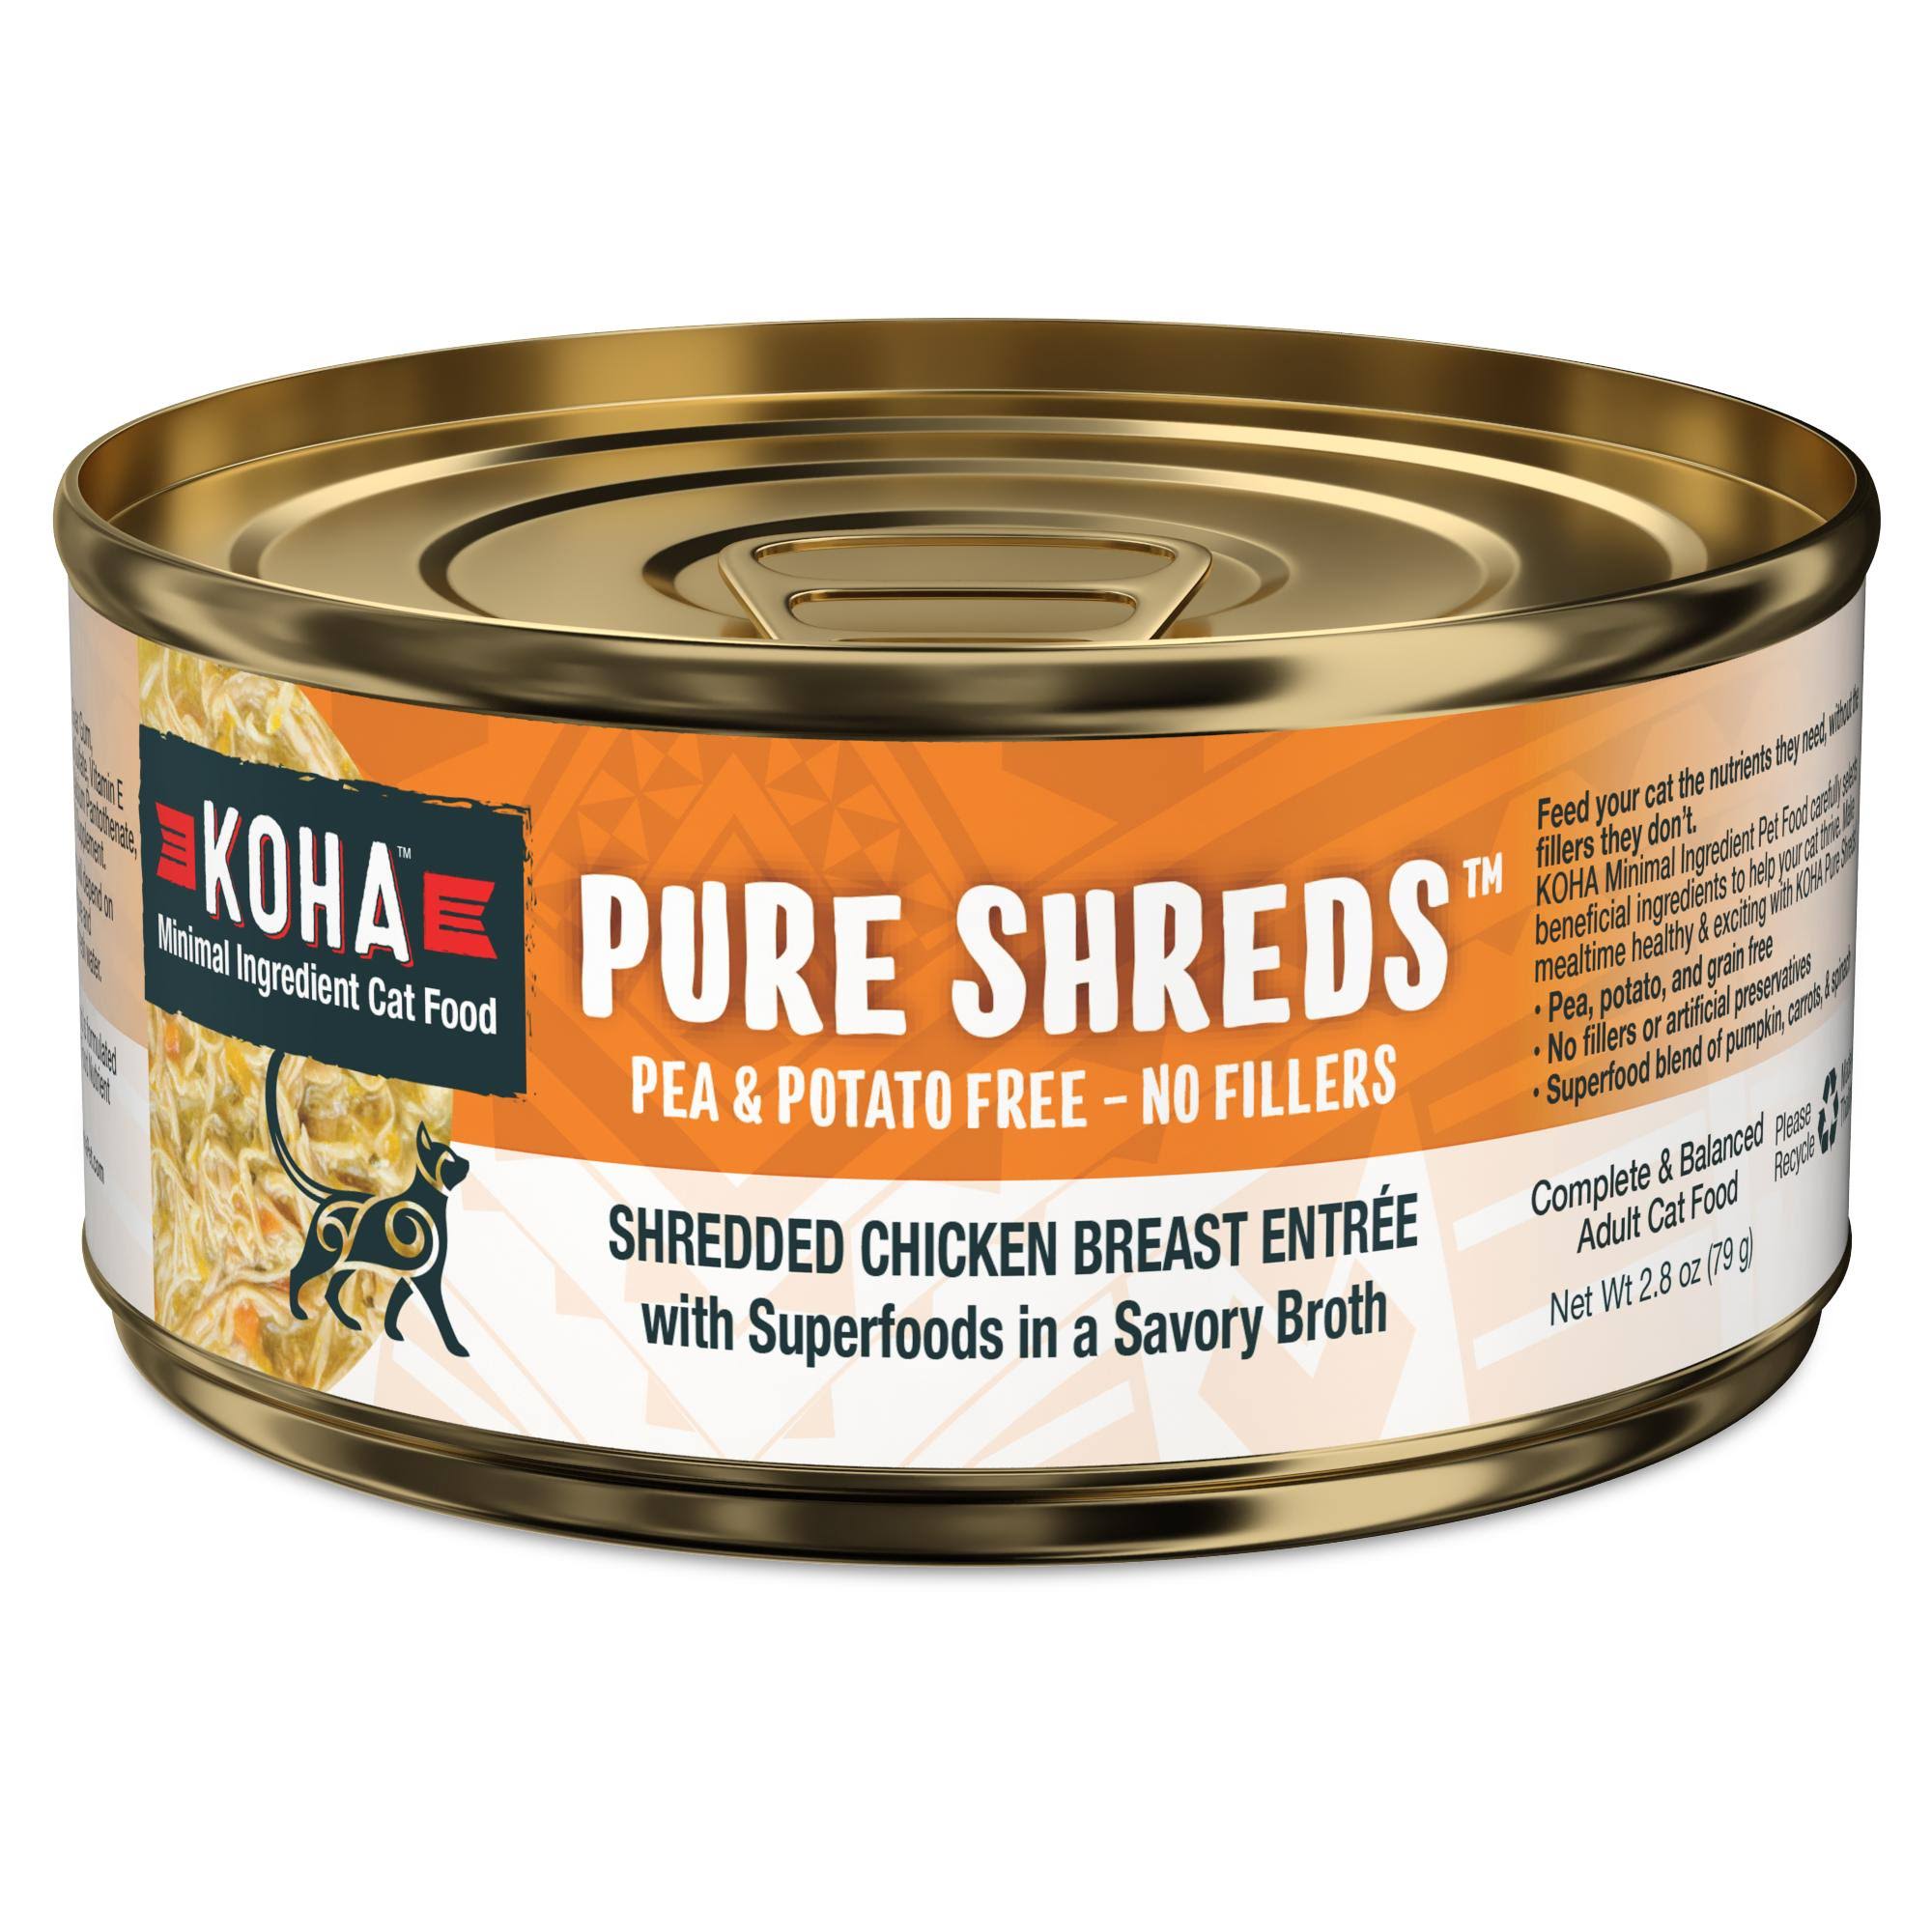 Koha Pure Shreds Shredded Chicken Breast Entree Cat Food